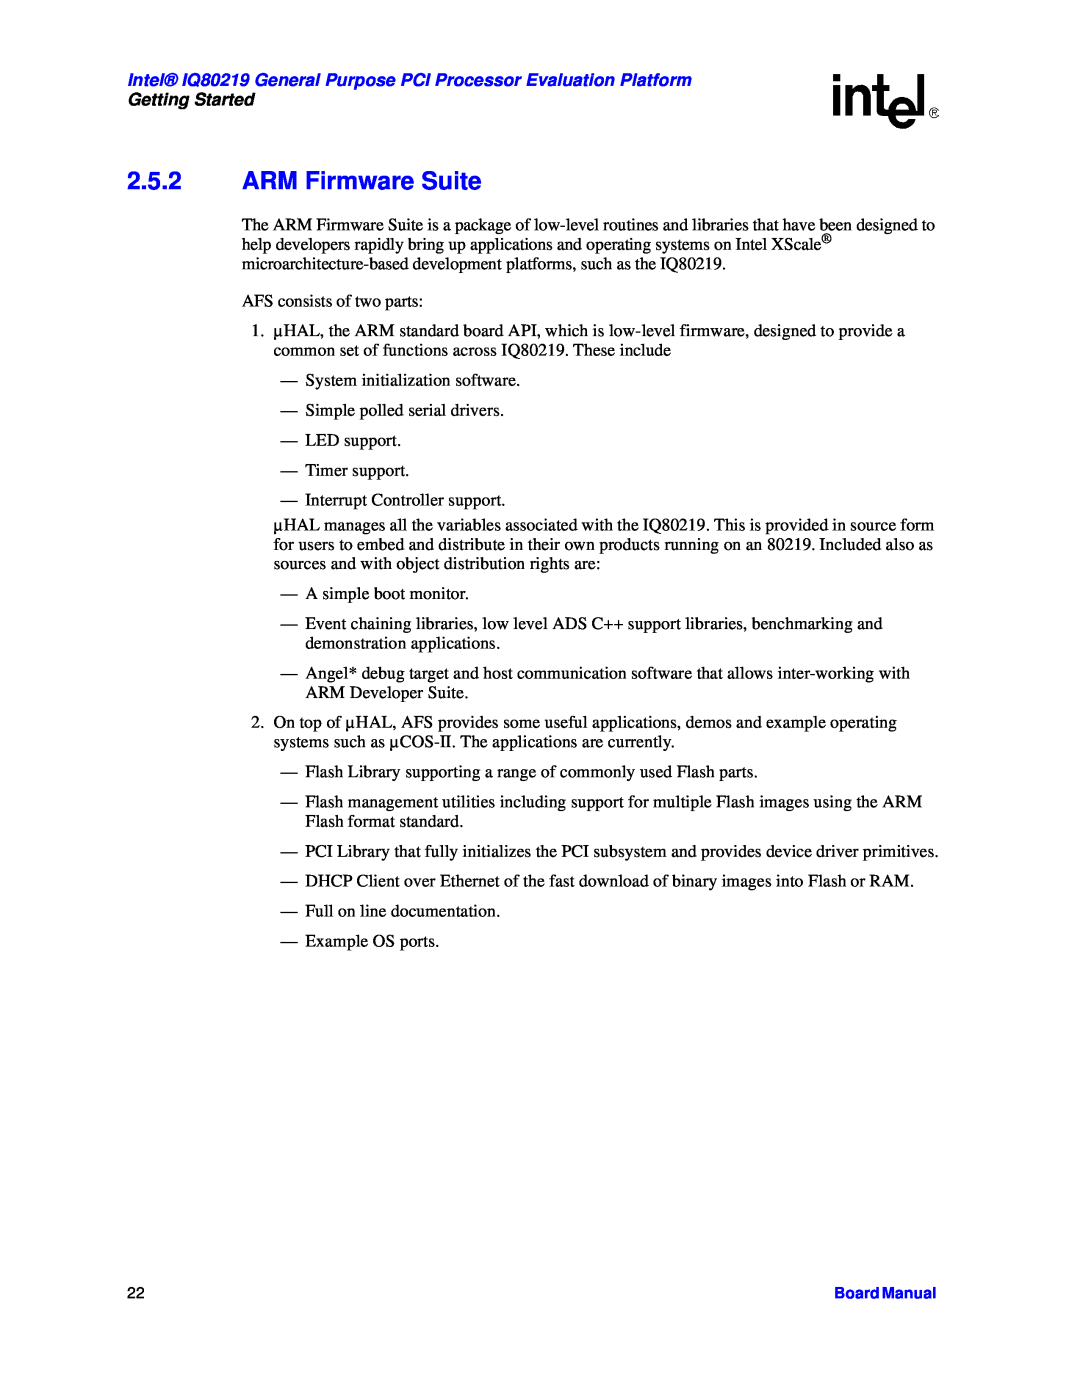 Intel manual ARM Firmware Suite, Intel IQ80219 General Purpose PCI Processor Evaluation Platform, Getting Started 